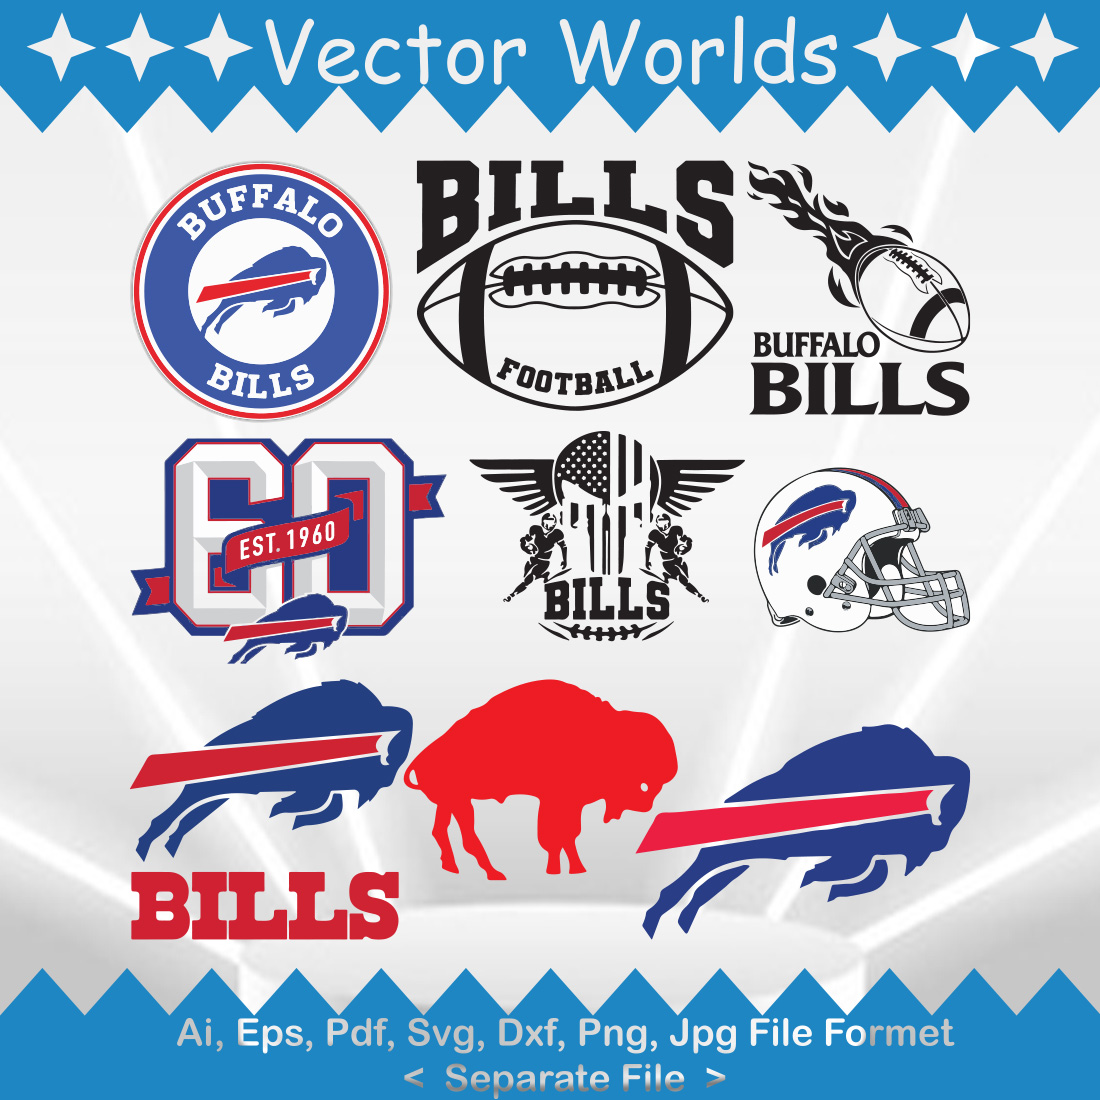 Buffalo Bills Logo SVG Vector Design cover image.